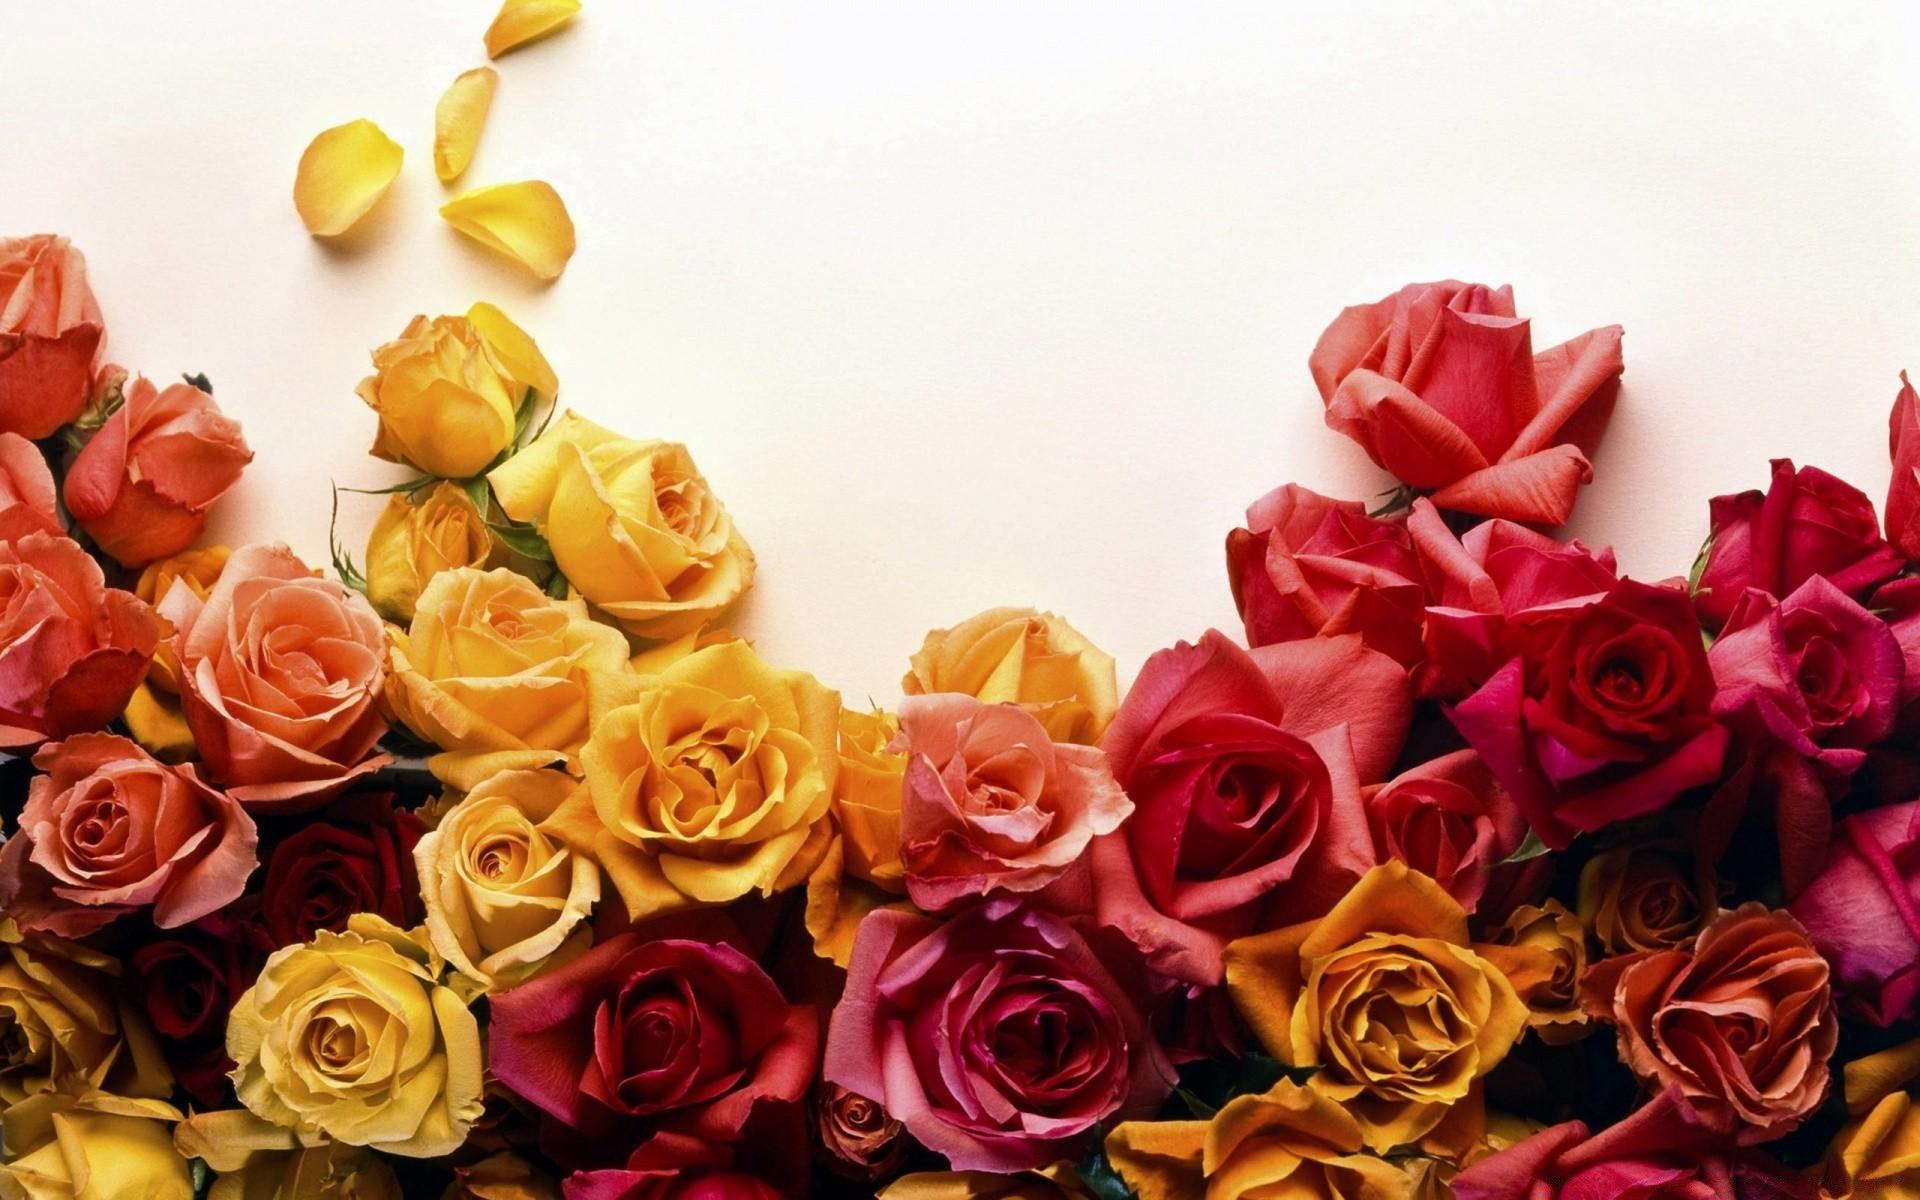 Roses Background. Desktop wallpaper for free